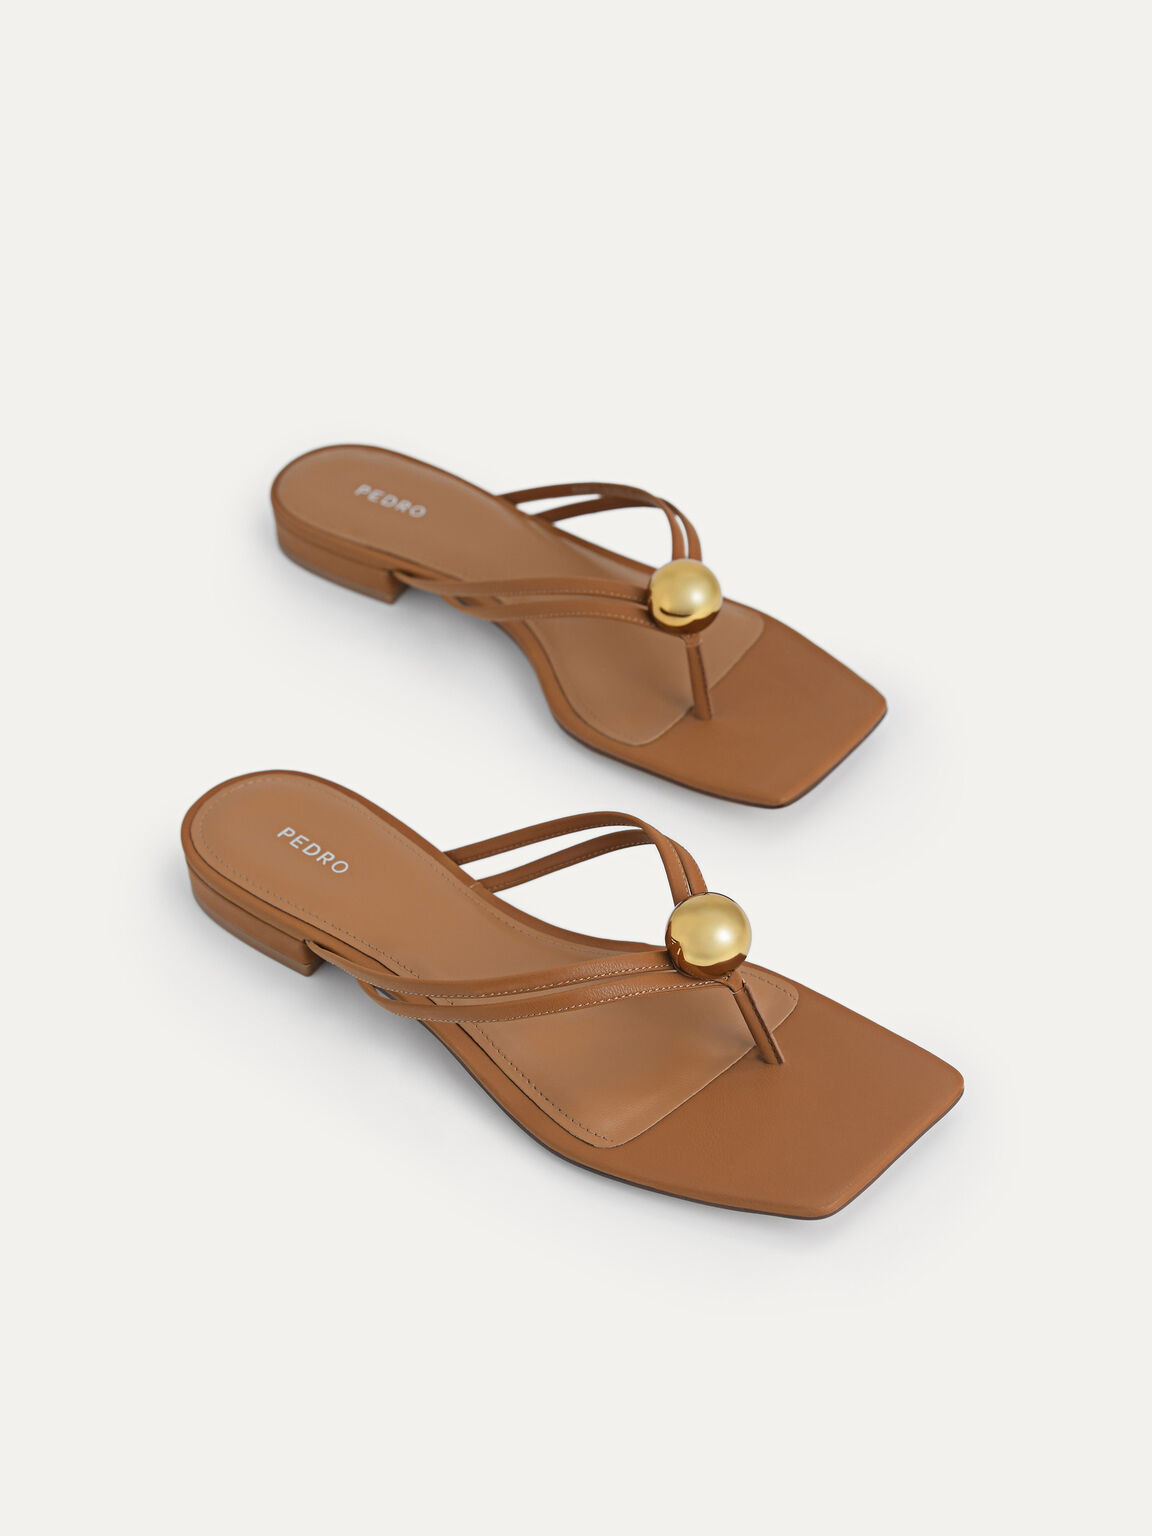 Orb Lace-Up Sandals, Camel